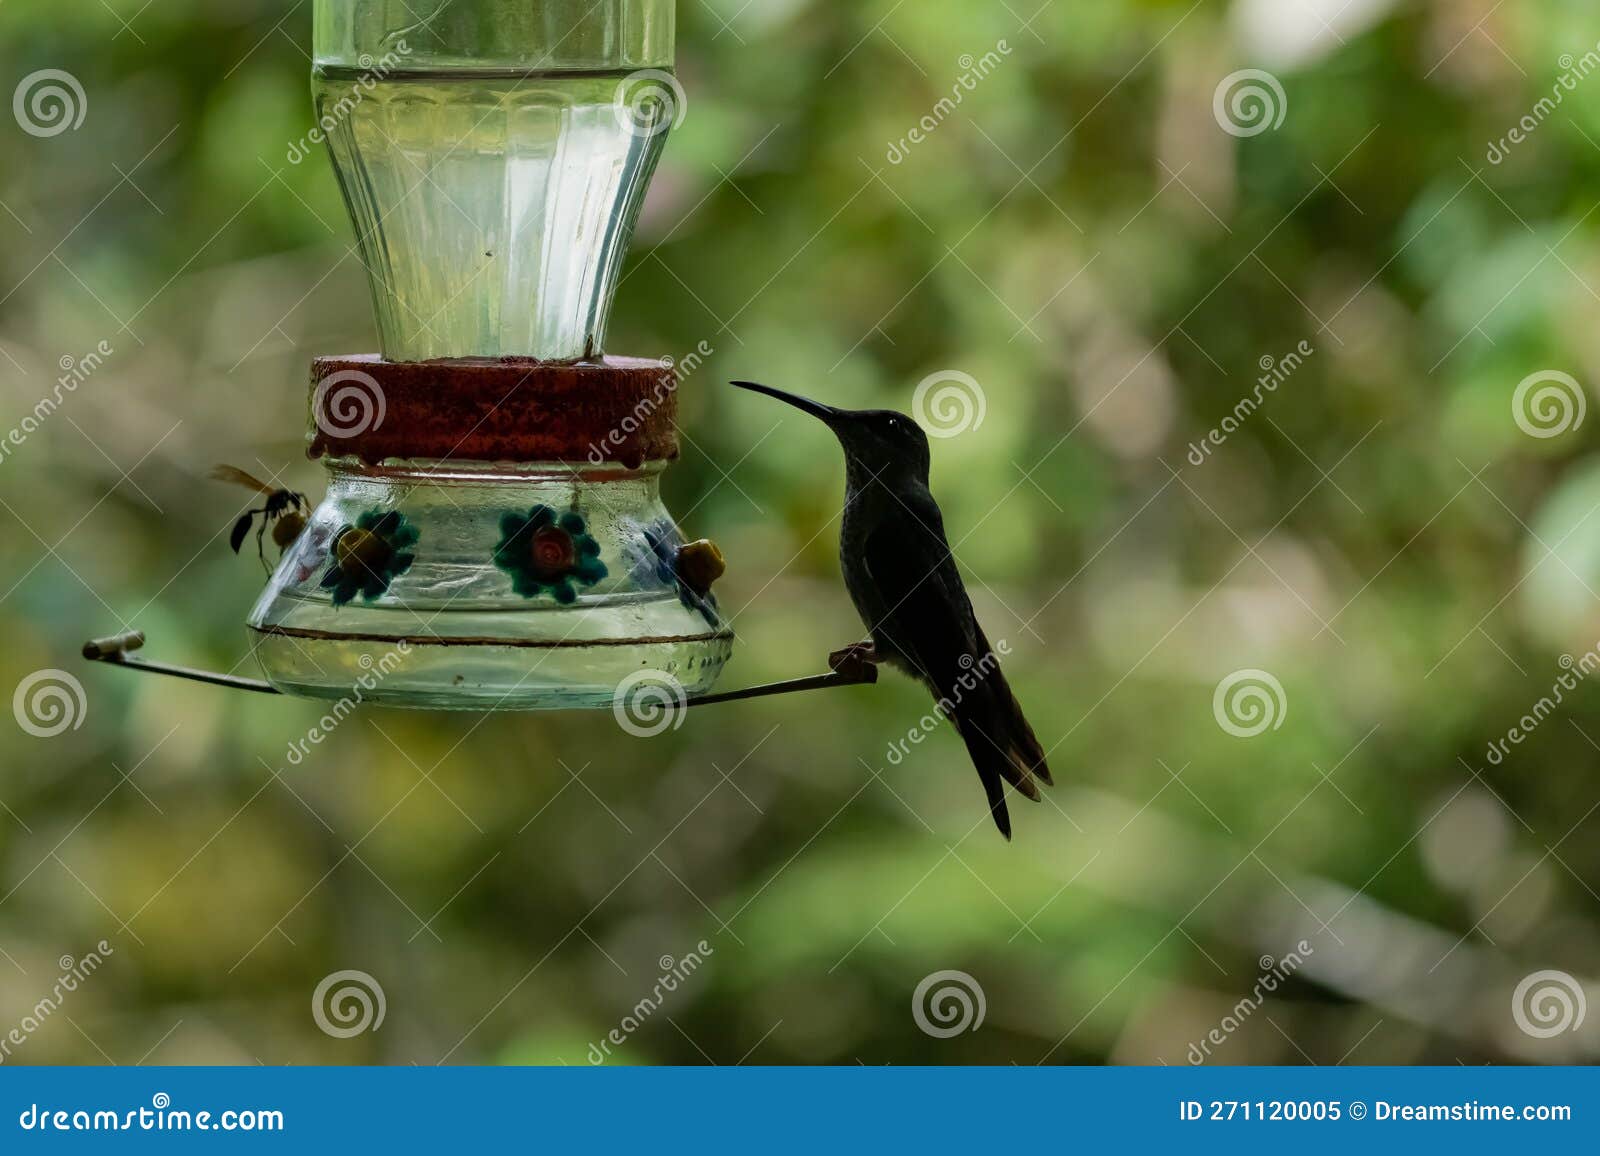 hummingbird also known as sparkling violetear or colibri oreja violeta drinking sugar water from feeder